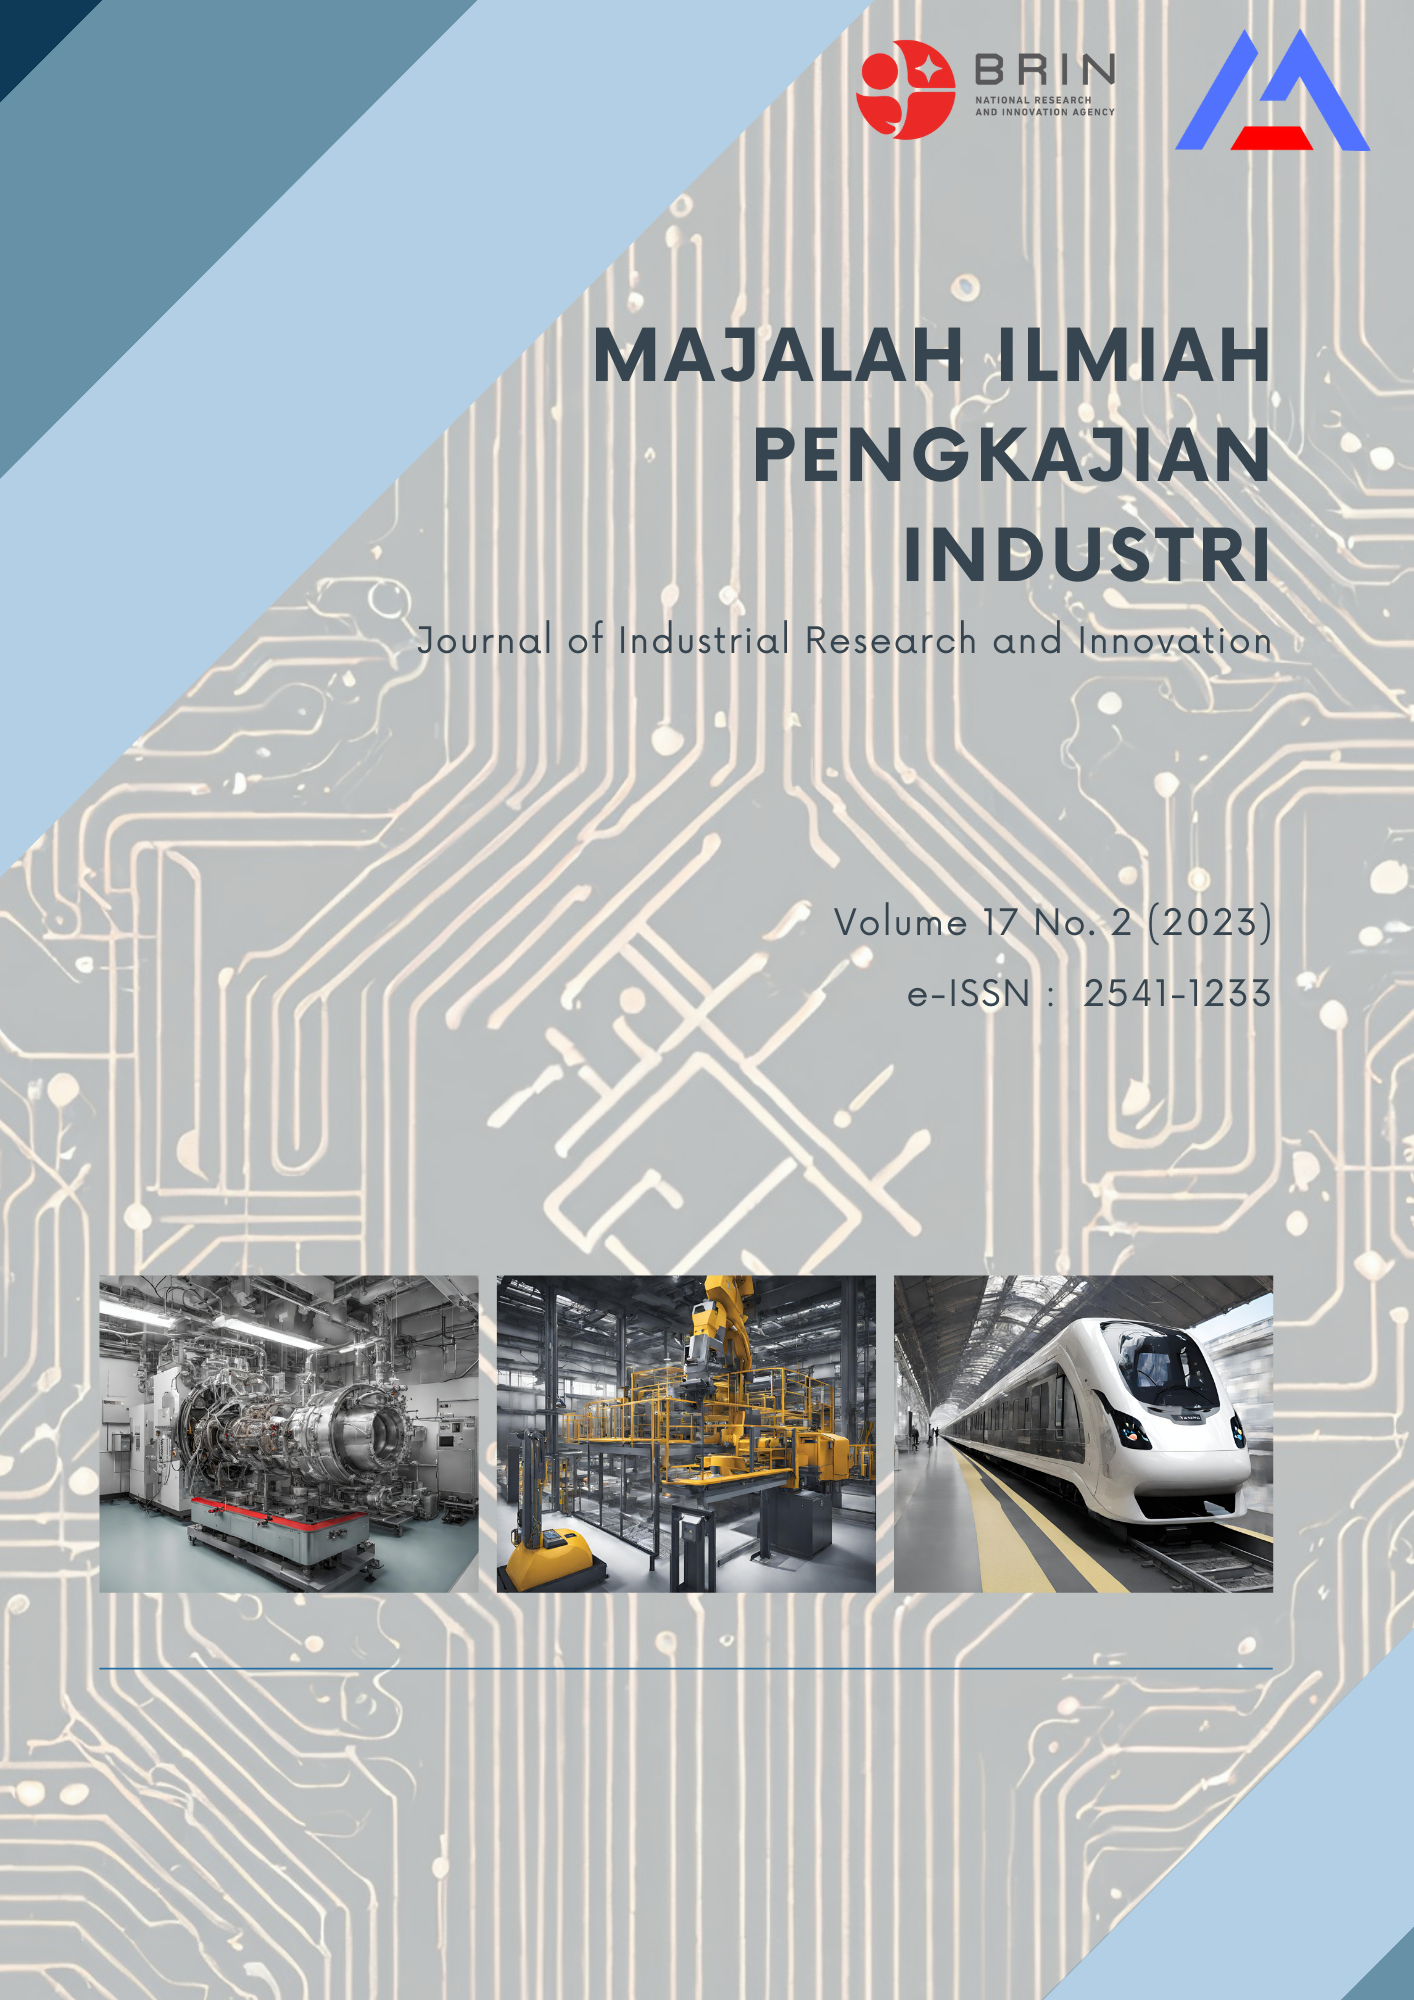 					View Vol. 17 No. 2 (2023): Majalah Ilmiah Pengkajian Industri; Journal of Industrial Research and Innovation
				